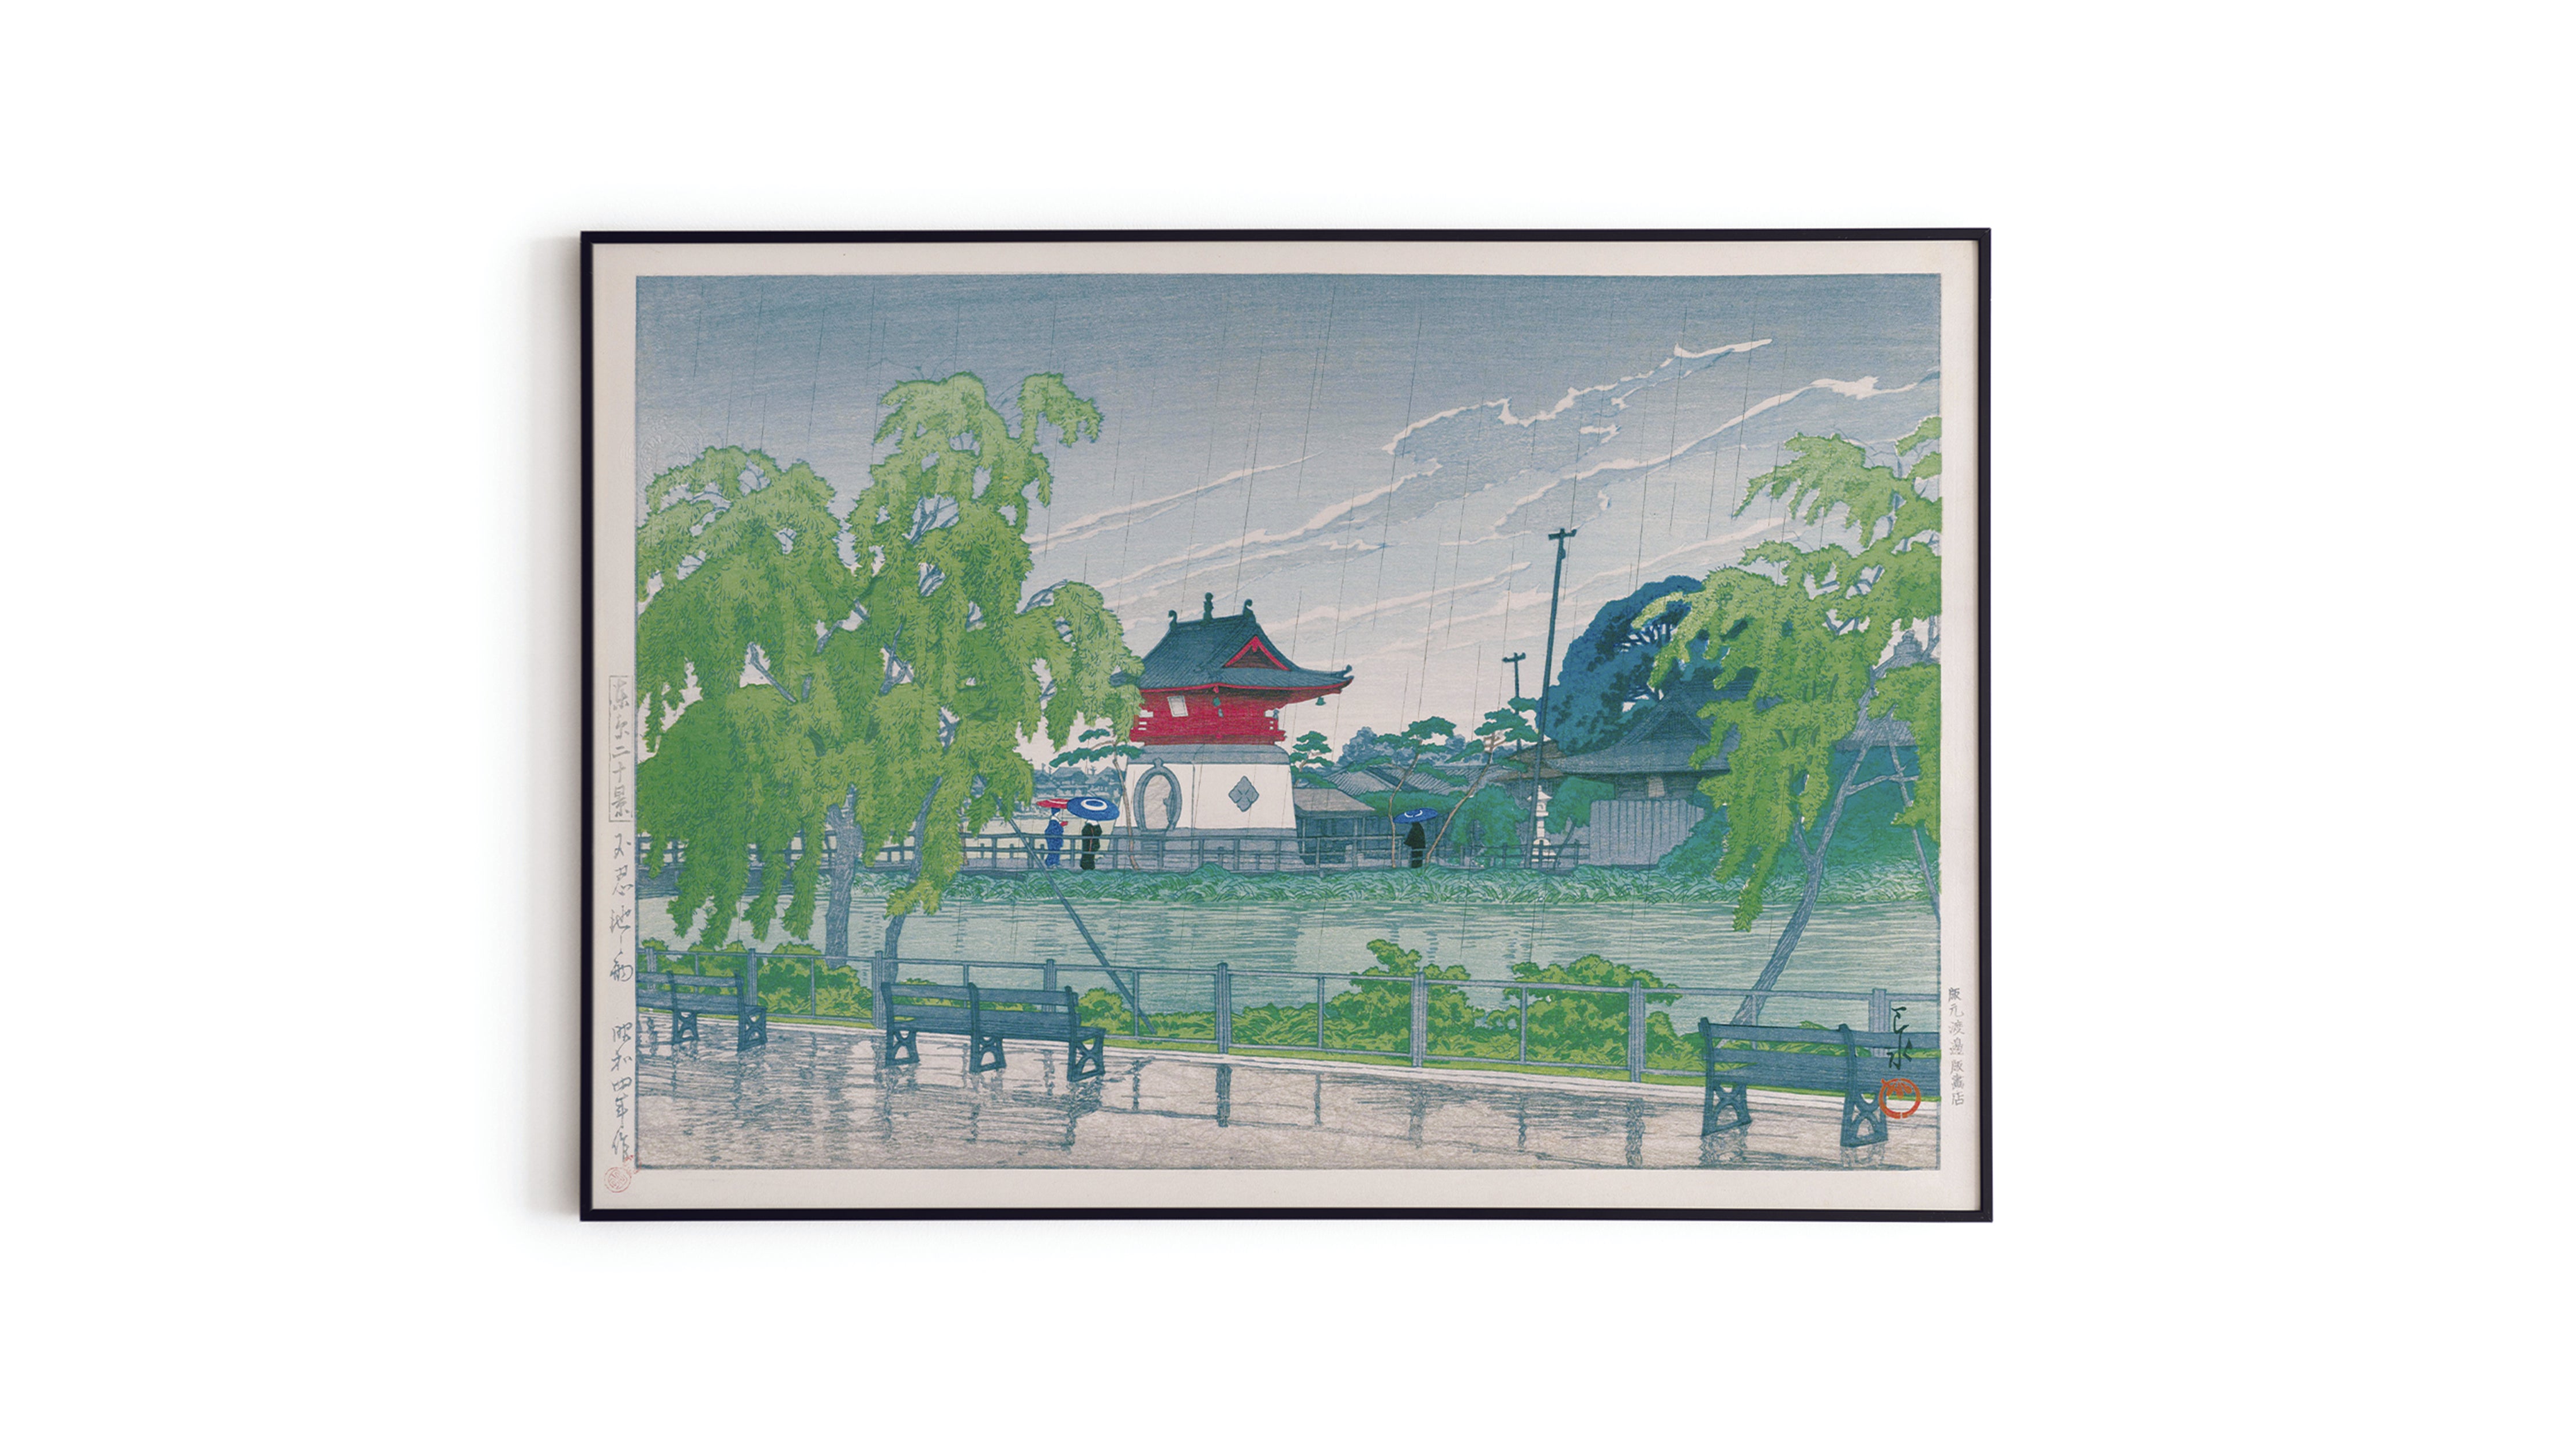 Rain at Shinobazu Pond, by Hasui - Giant Poster